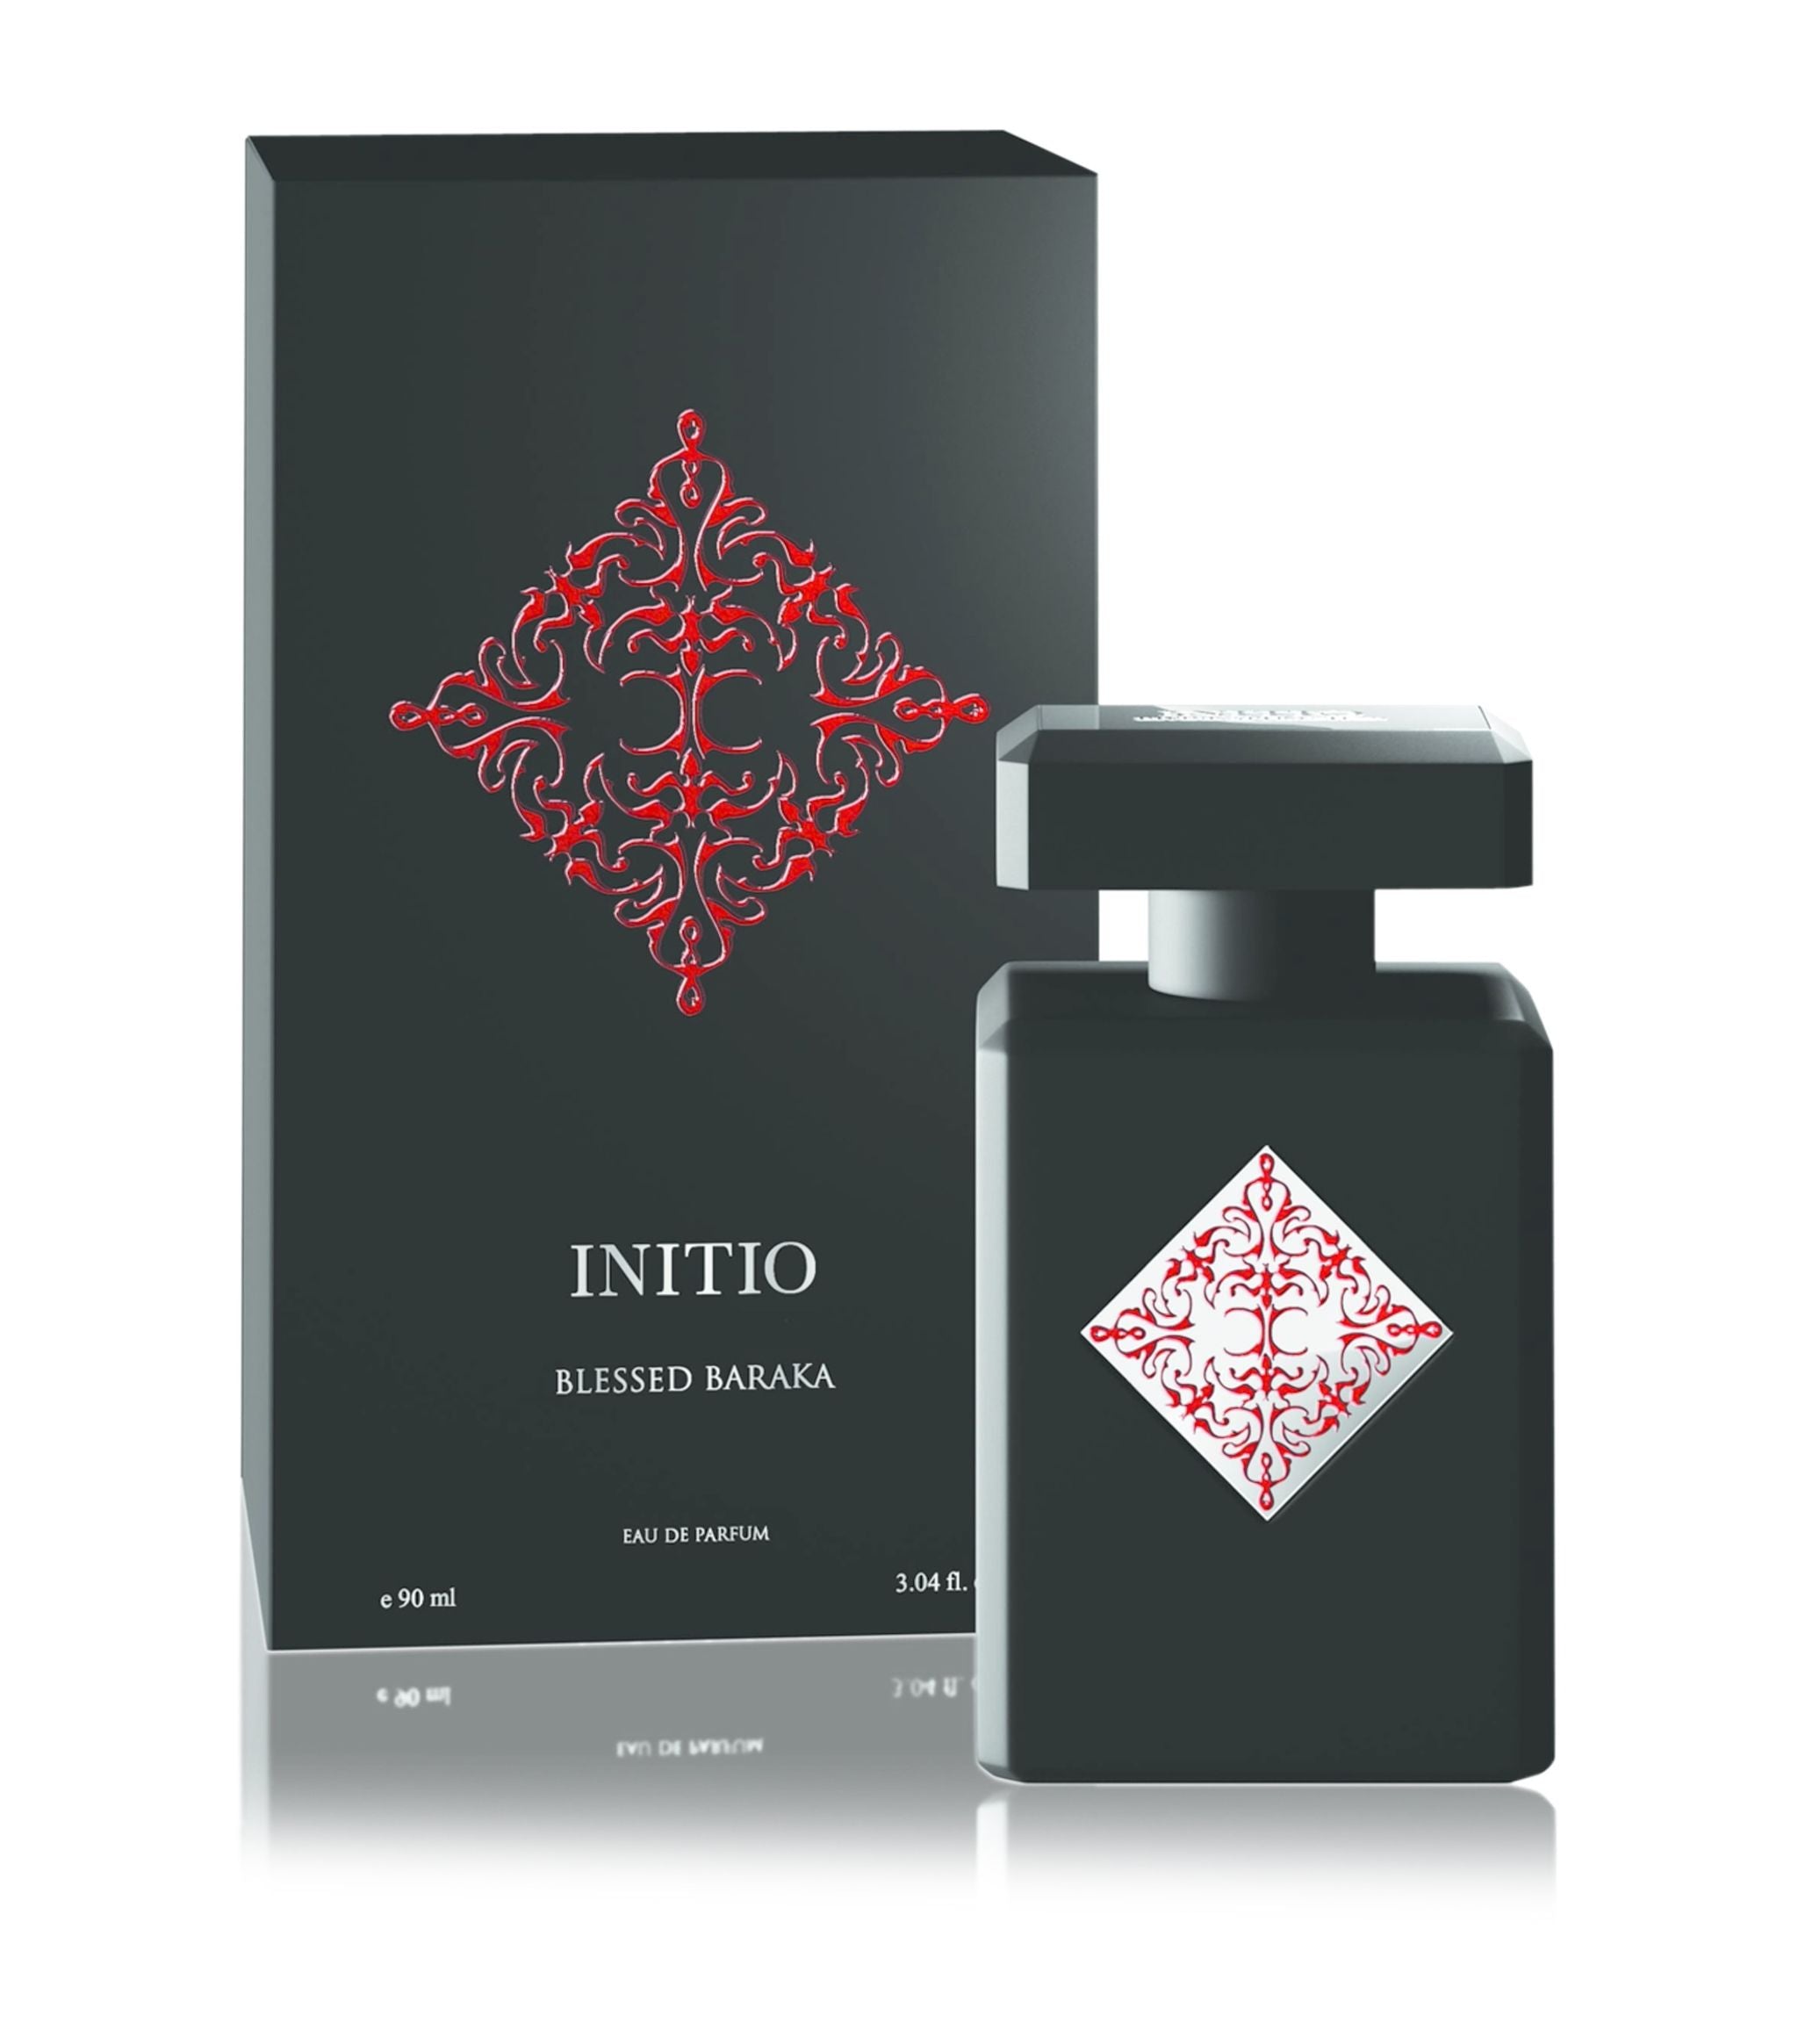 Initio Parfums Blessed Baraka Samples